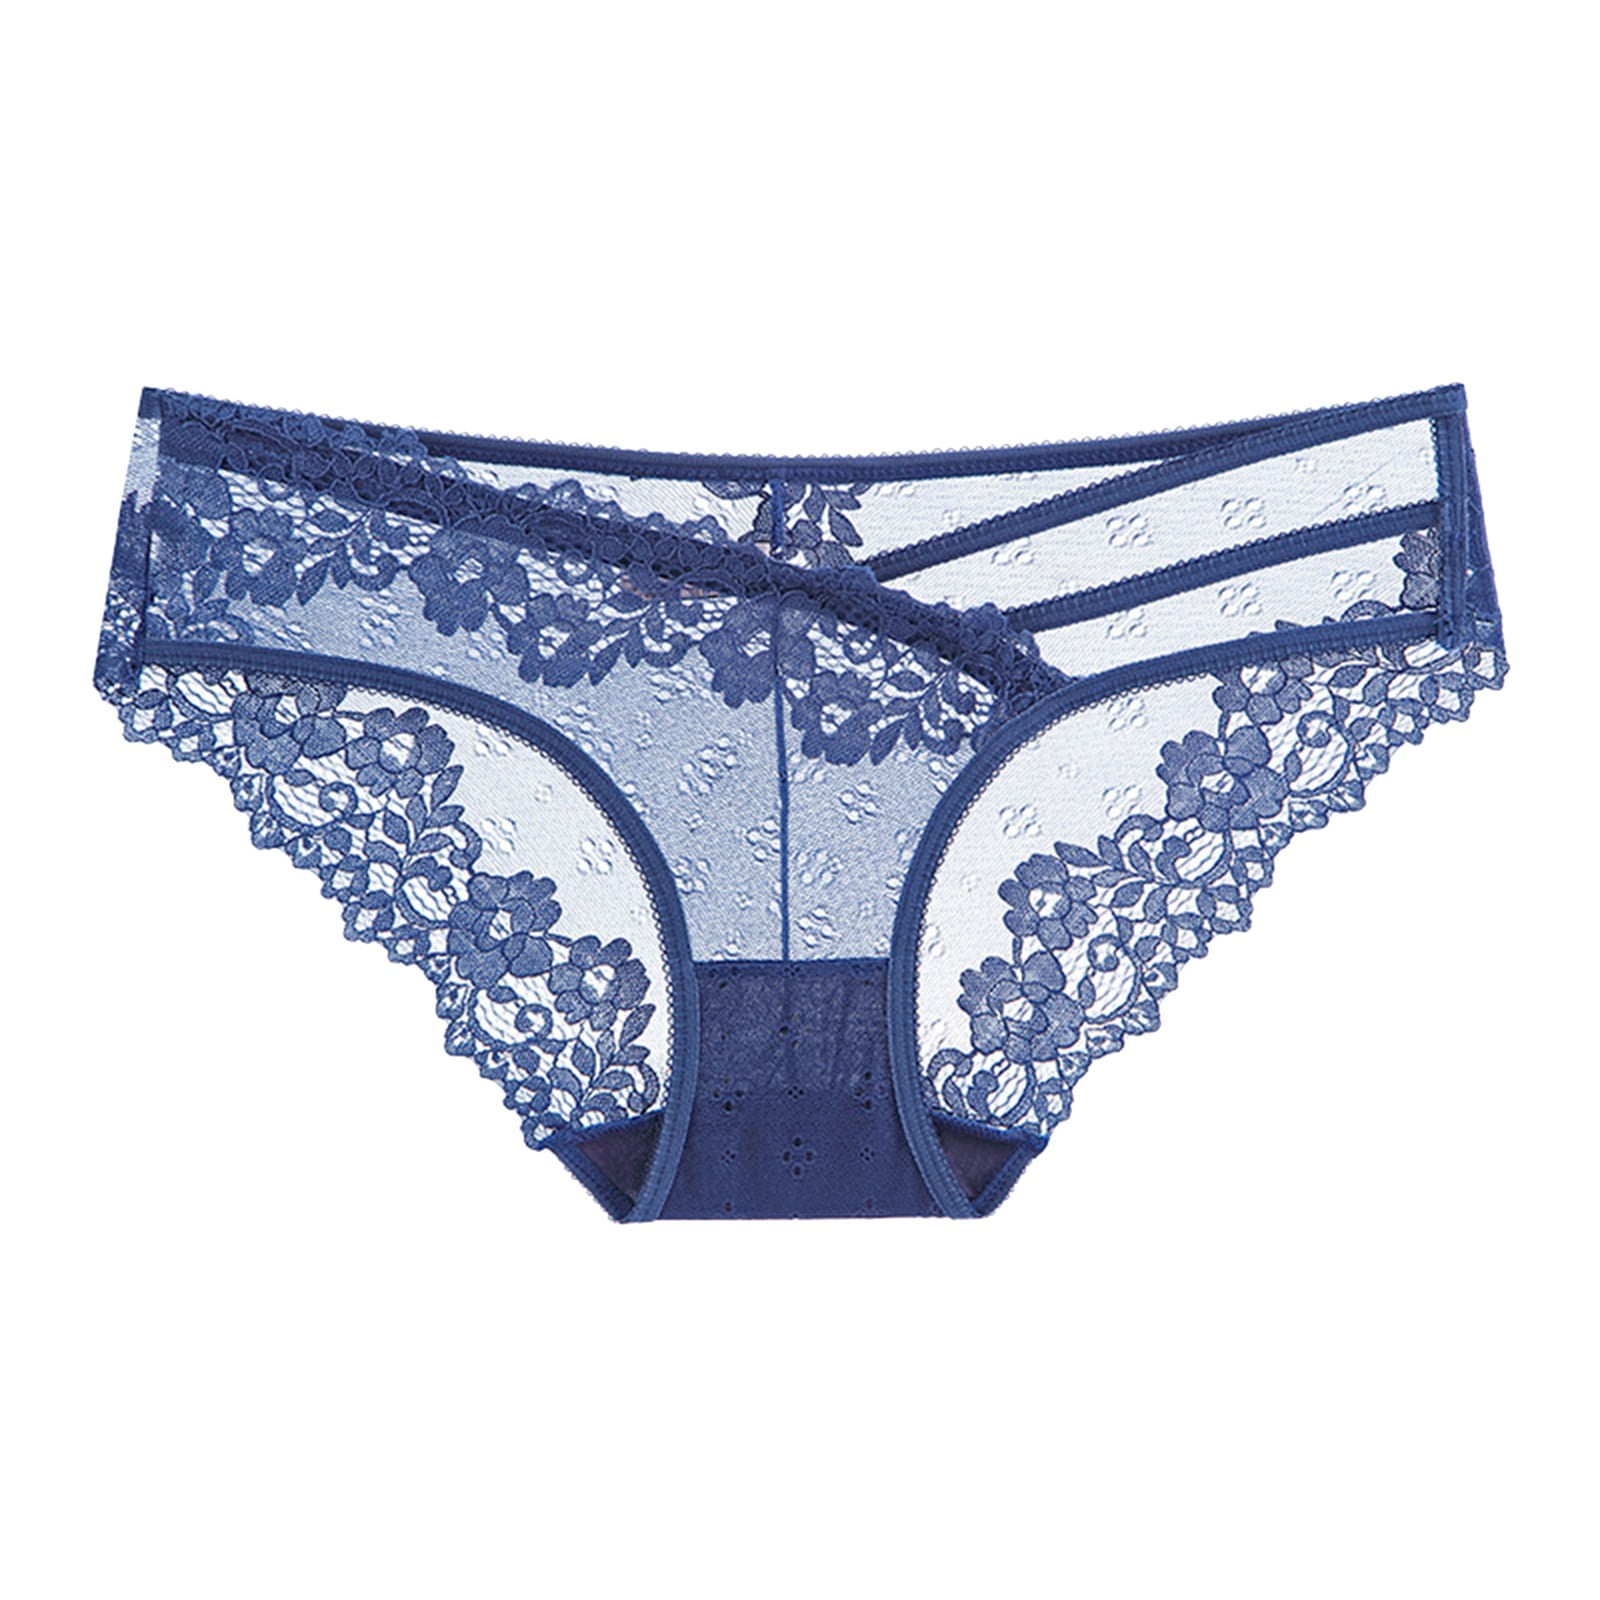 Buy Blue & Grey Panties for Women by Freecultr Online